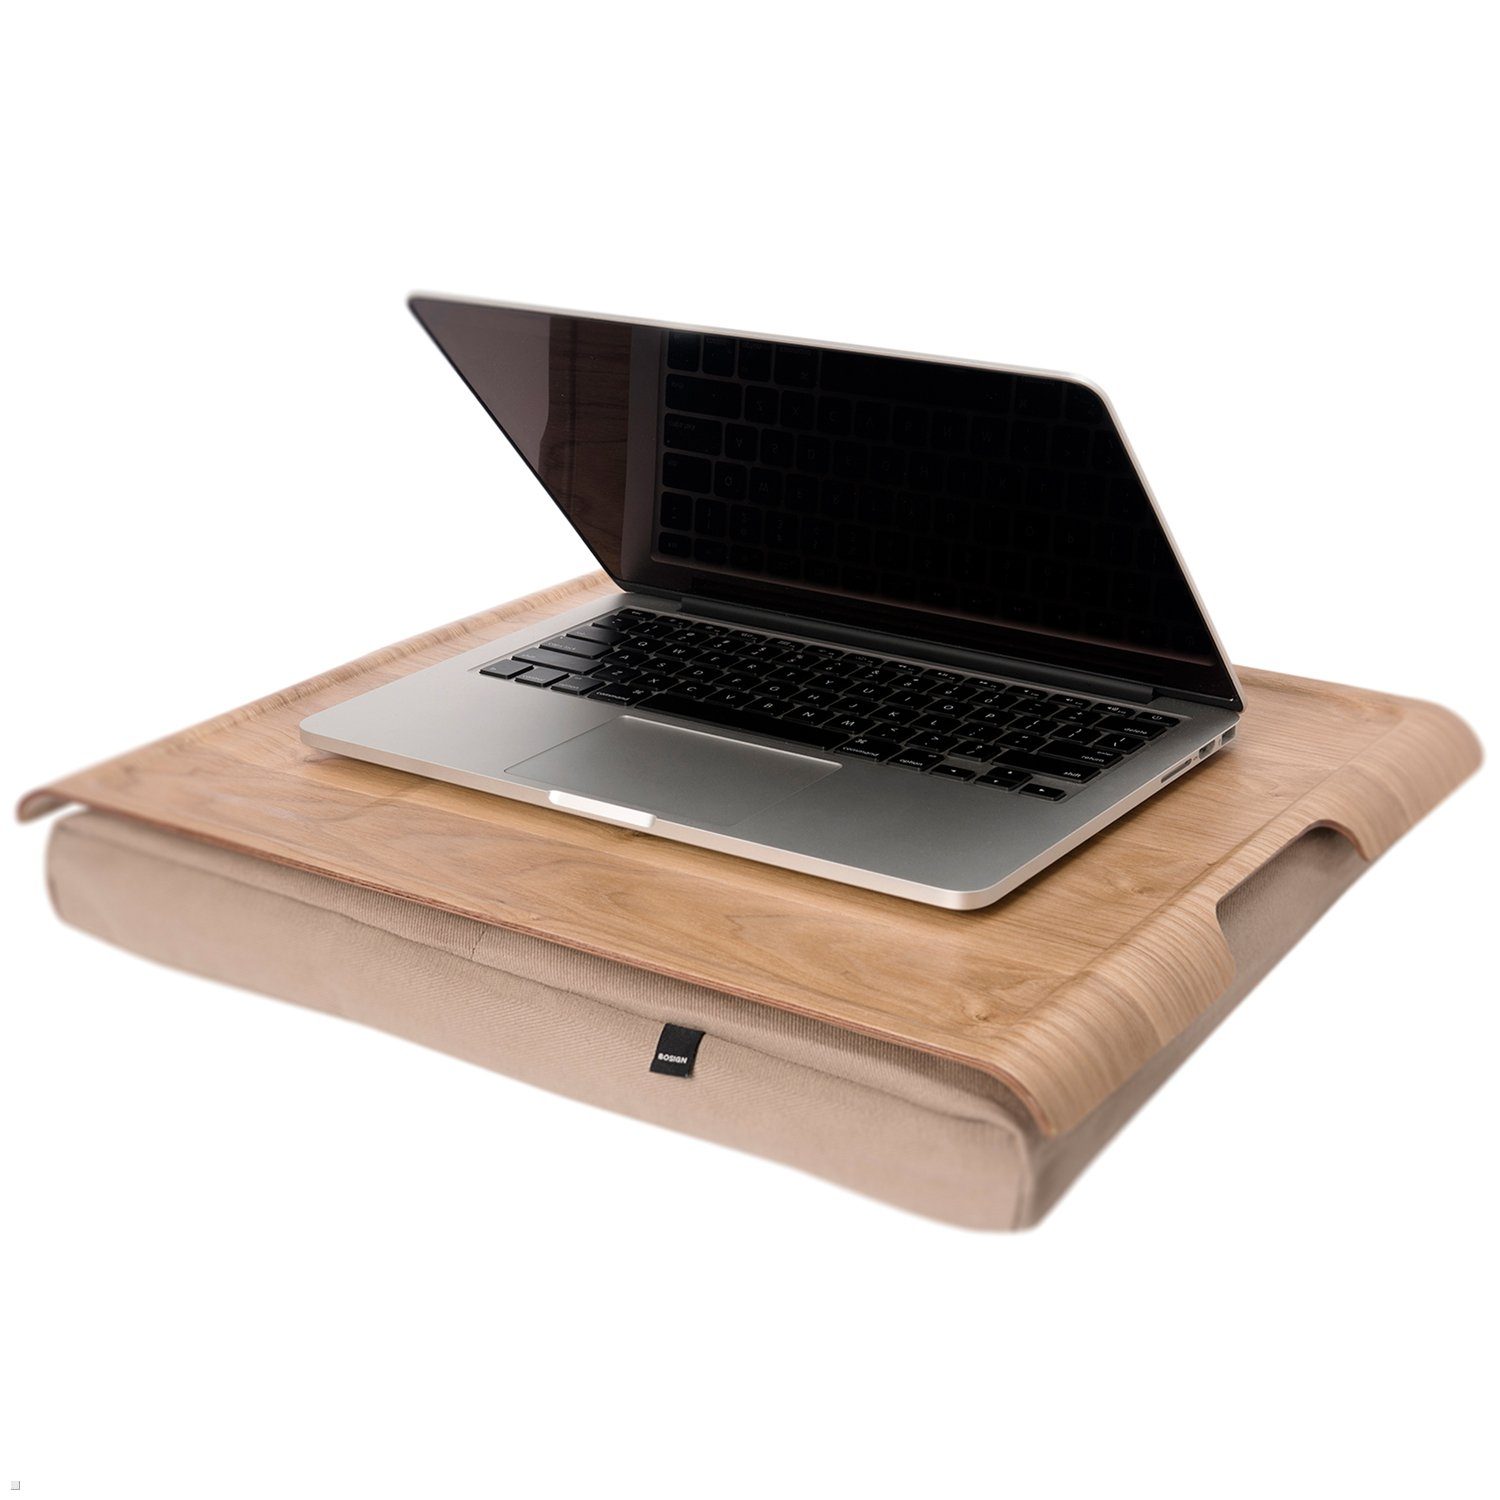 Bosign Laptop Tablett Laptray, Weidenholz, Baumwolle